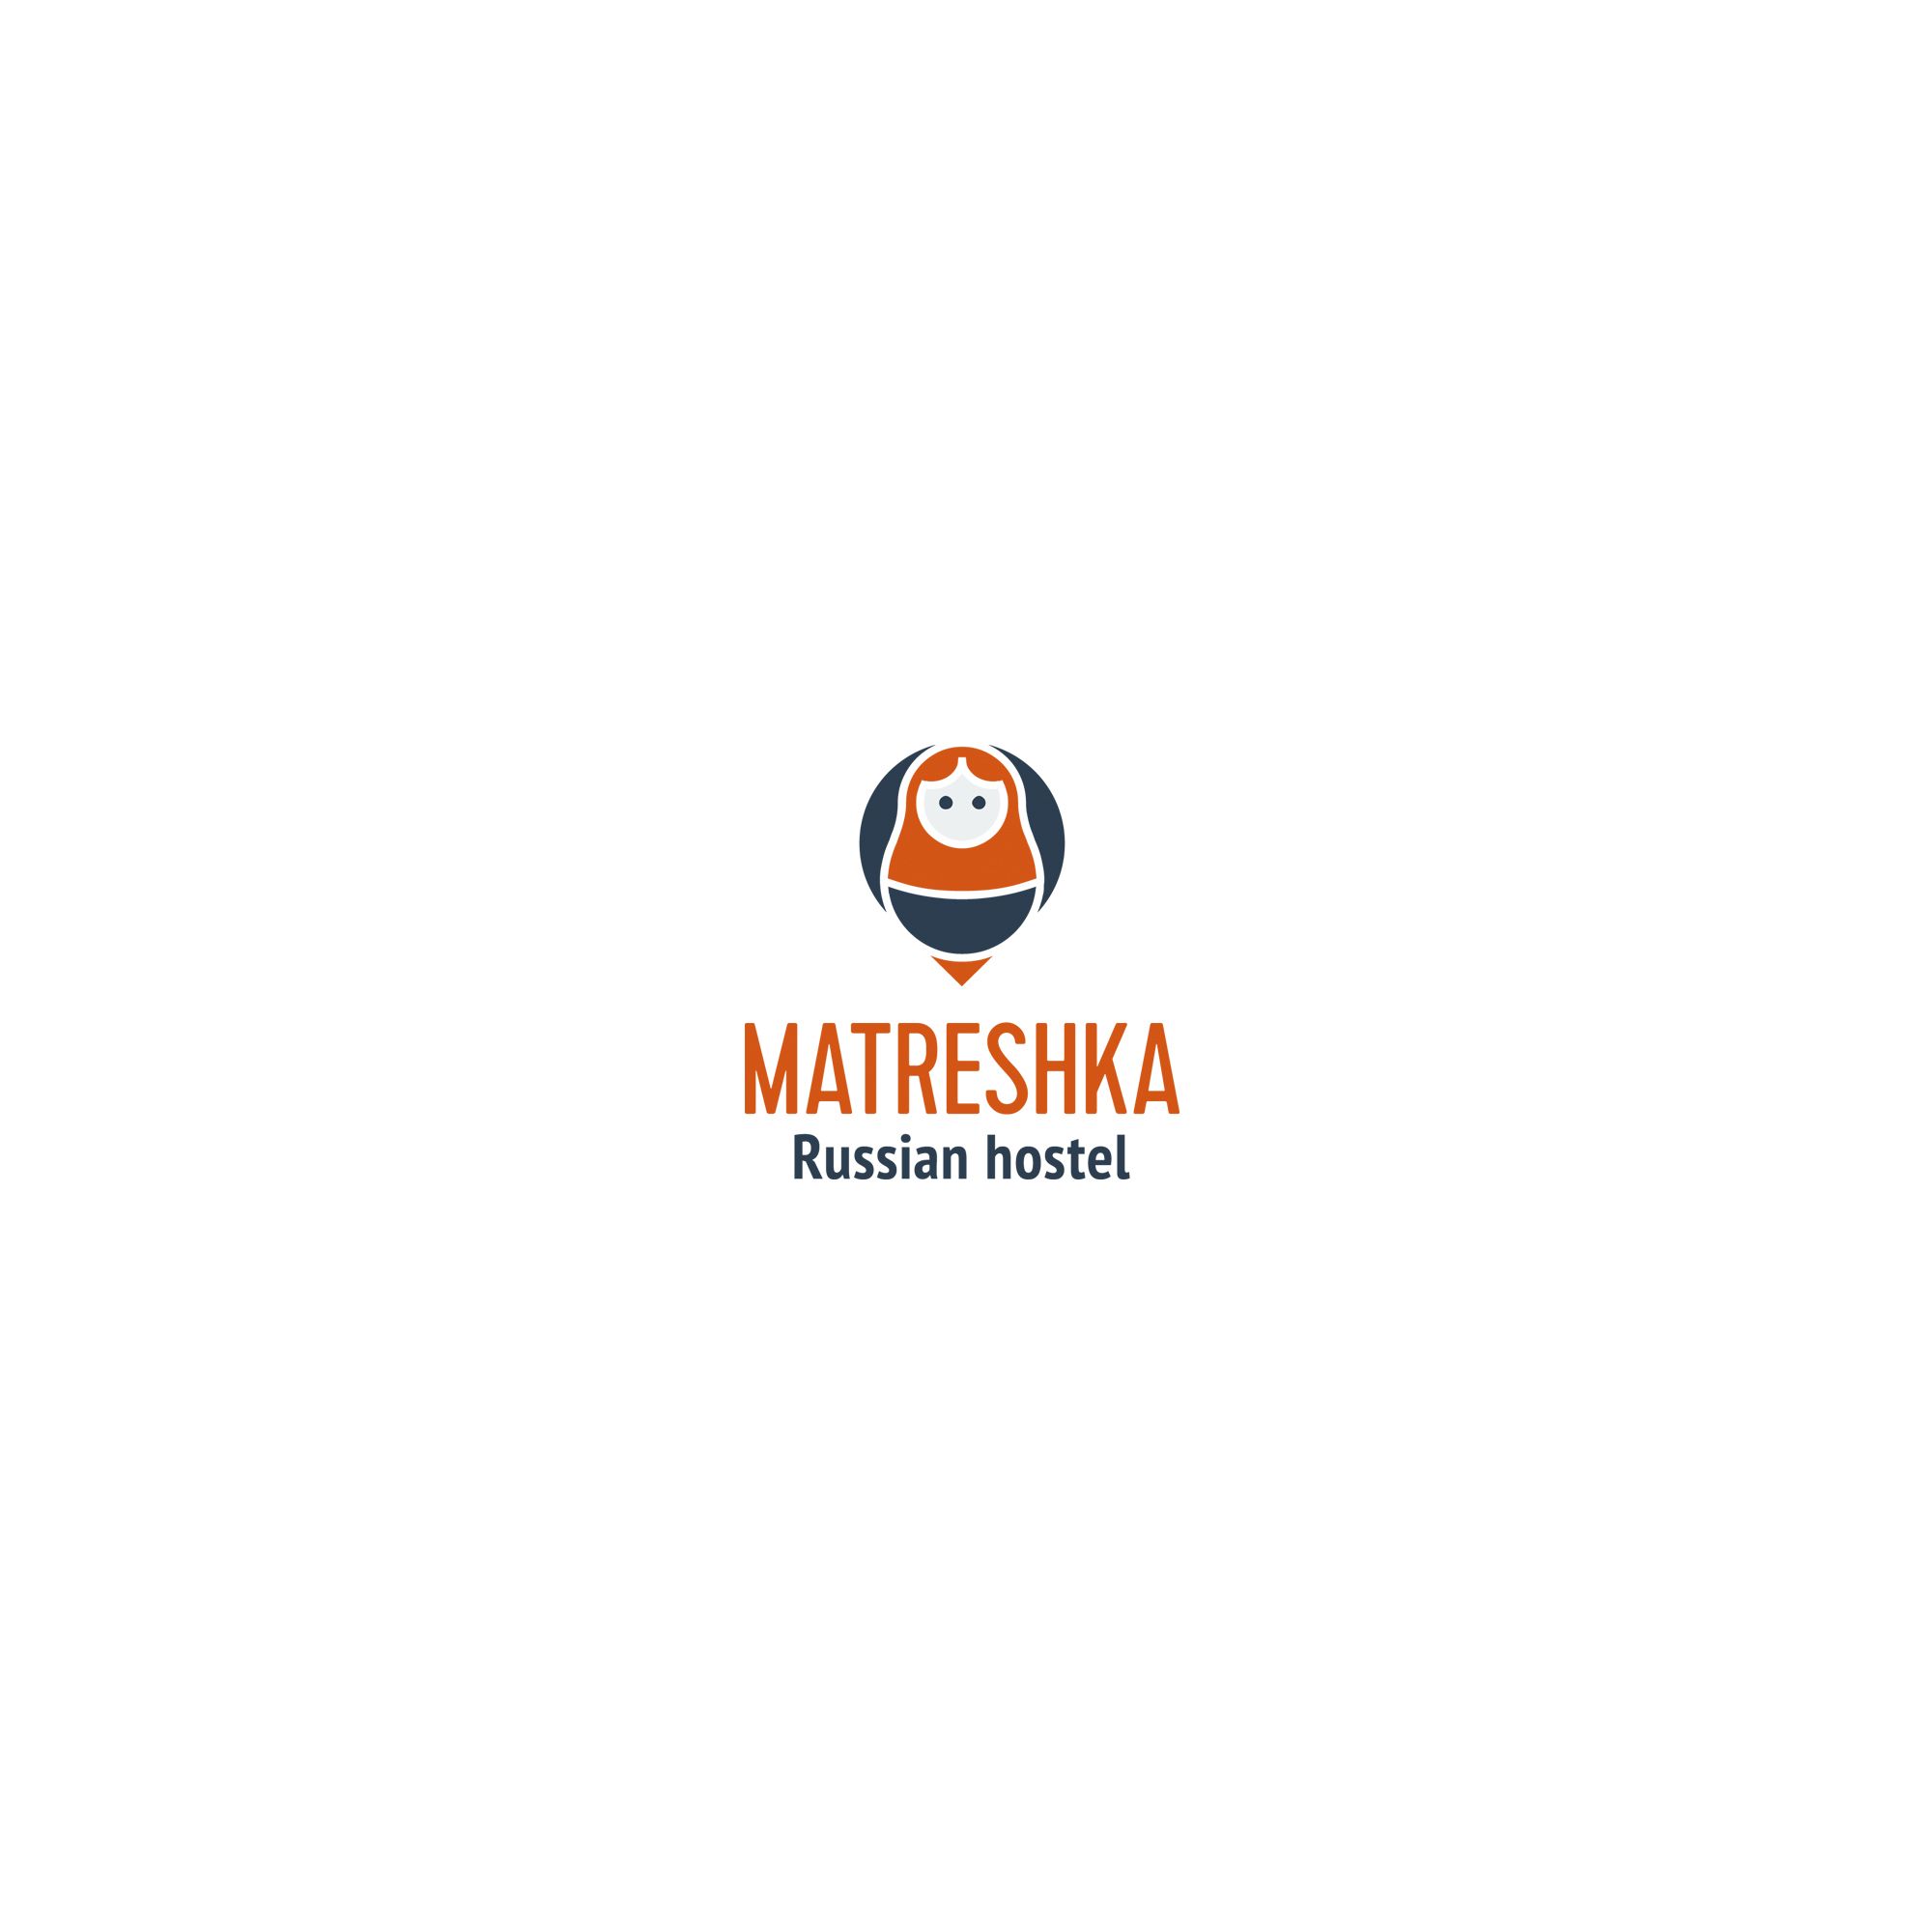 Логотип MATRESHKA Russian hostel - дизайнер Gas-Min